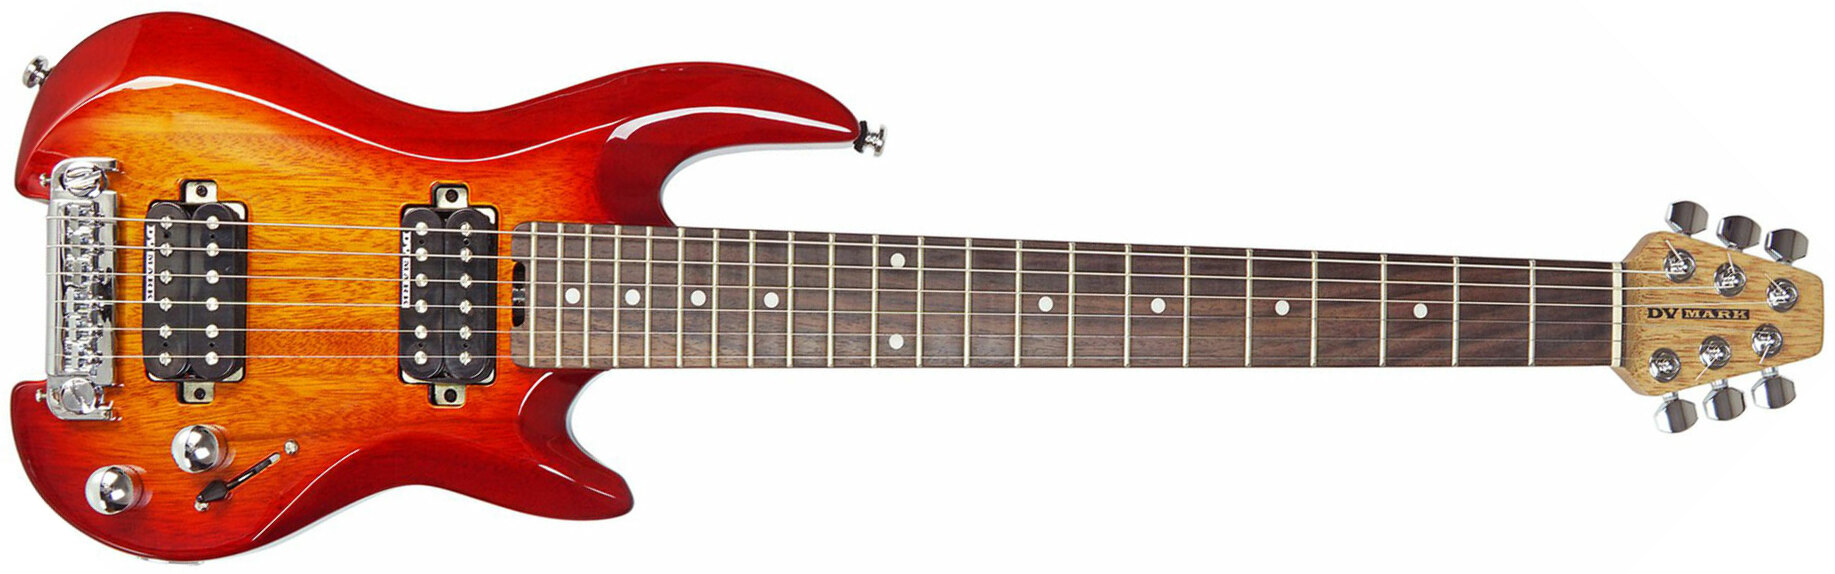 Dv Mark Dv Little Guitar G1 Hh Ht Rw - Cherry Red Sunburst - Travel & mini electric guitar - Main picture